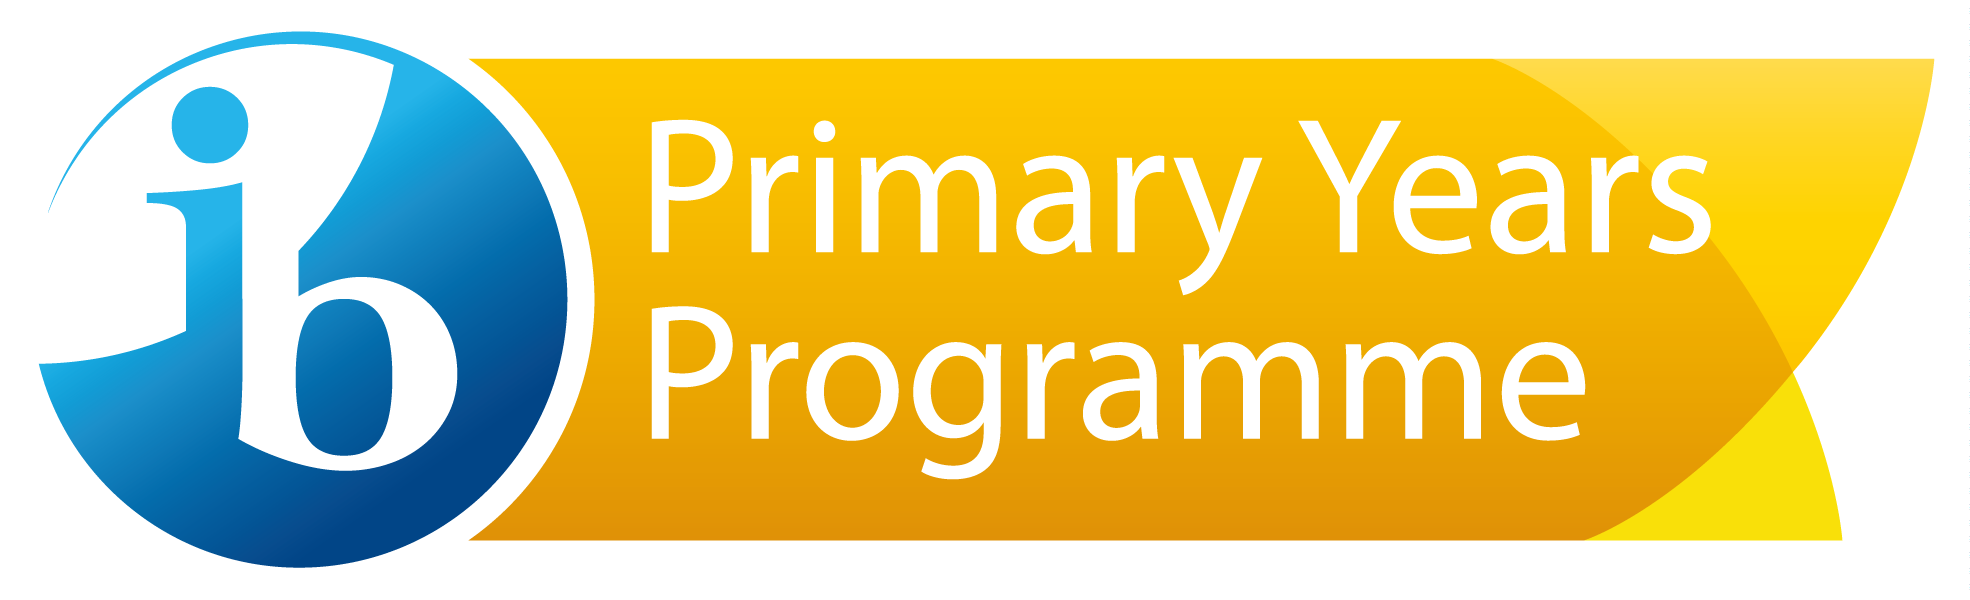 Primary Years Programme logo